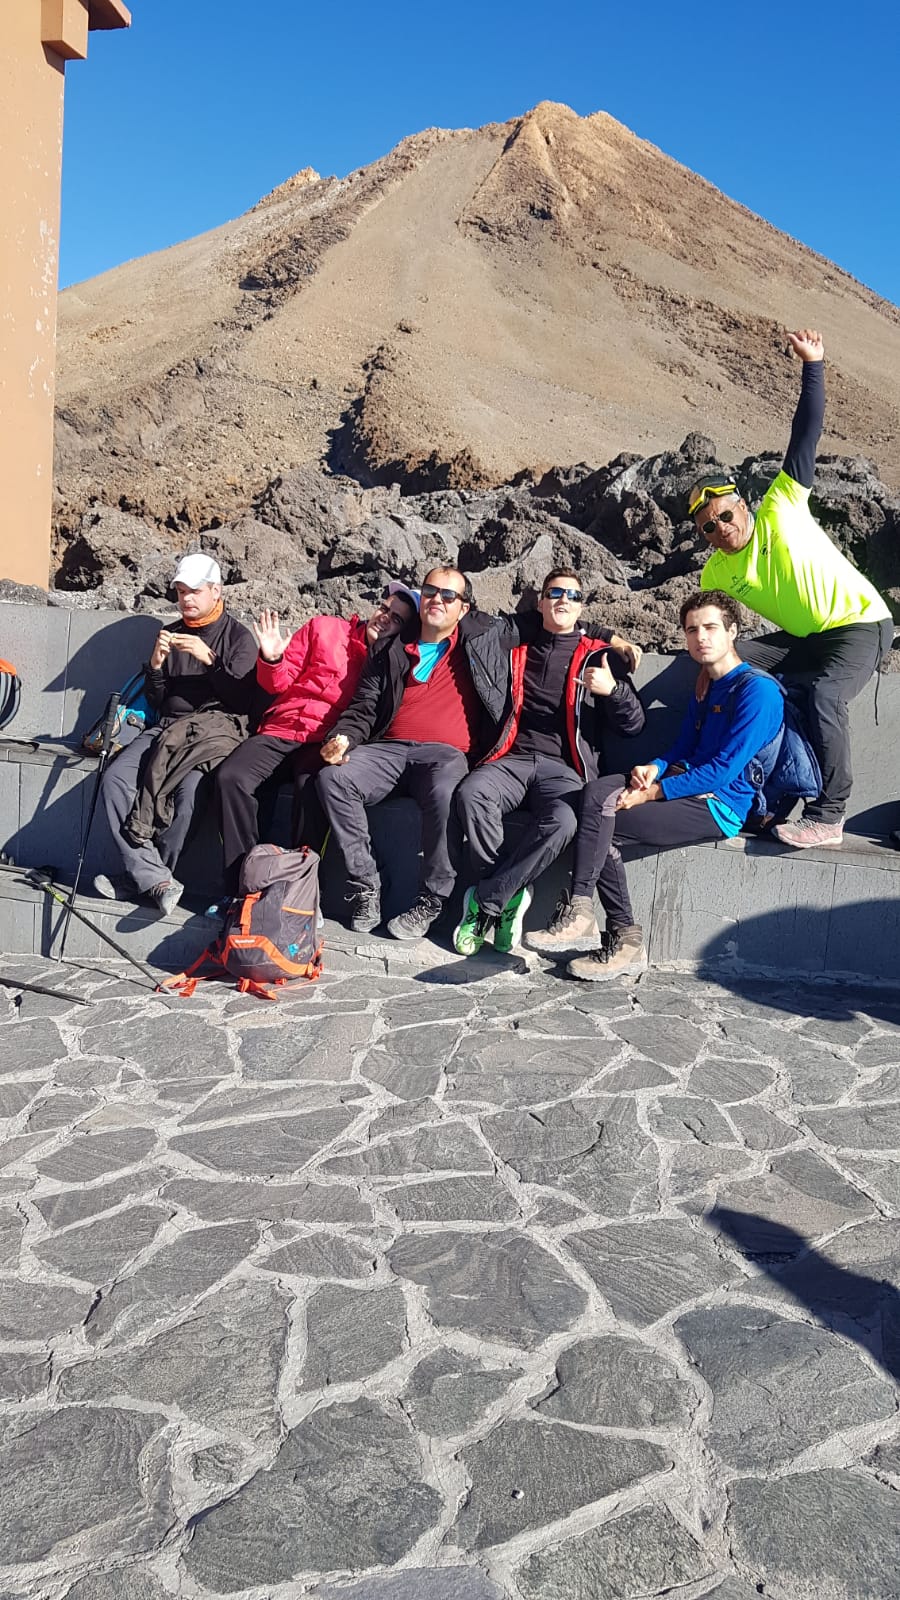 Ascenso al Teide